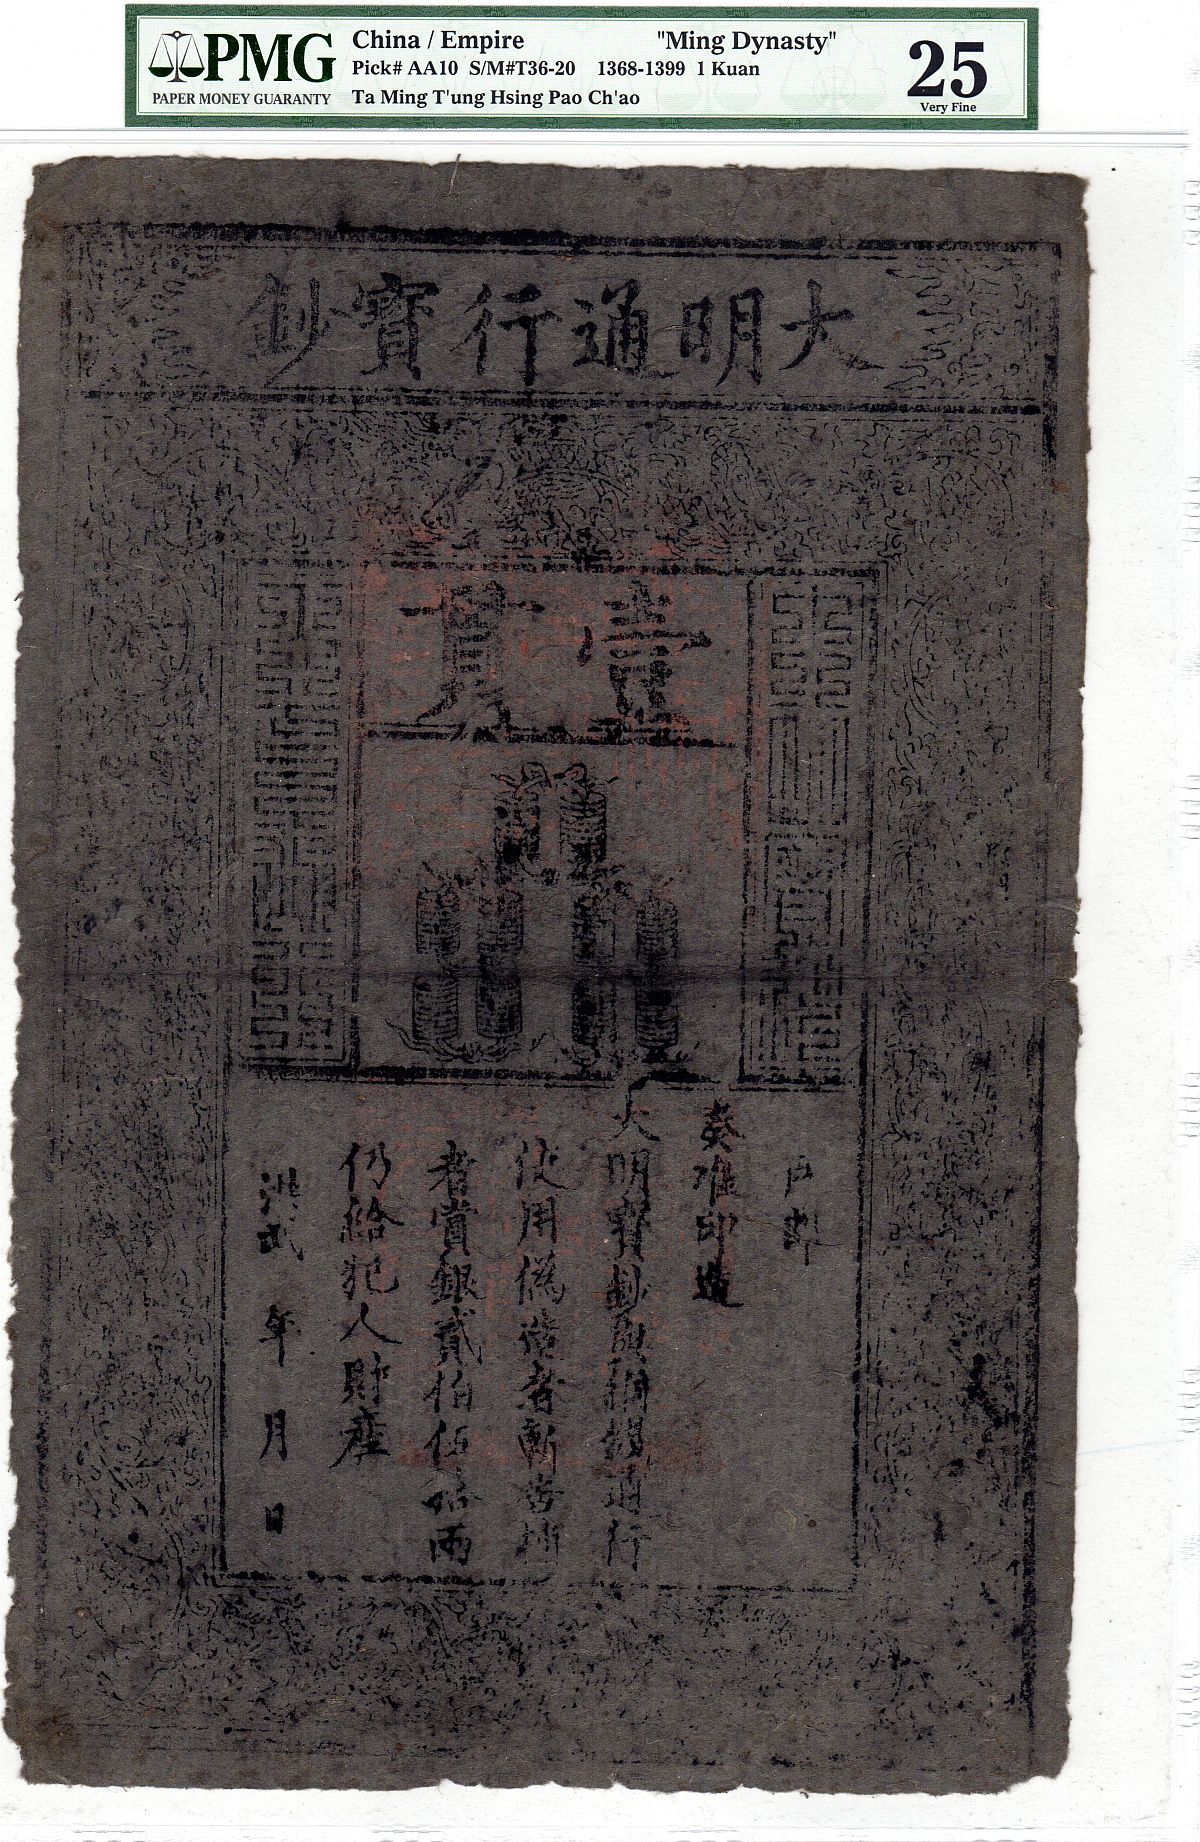 Ming Dynasty Note, Pick AA10, 1368-1399 One Kuan, PMG Very Fine 25